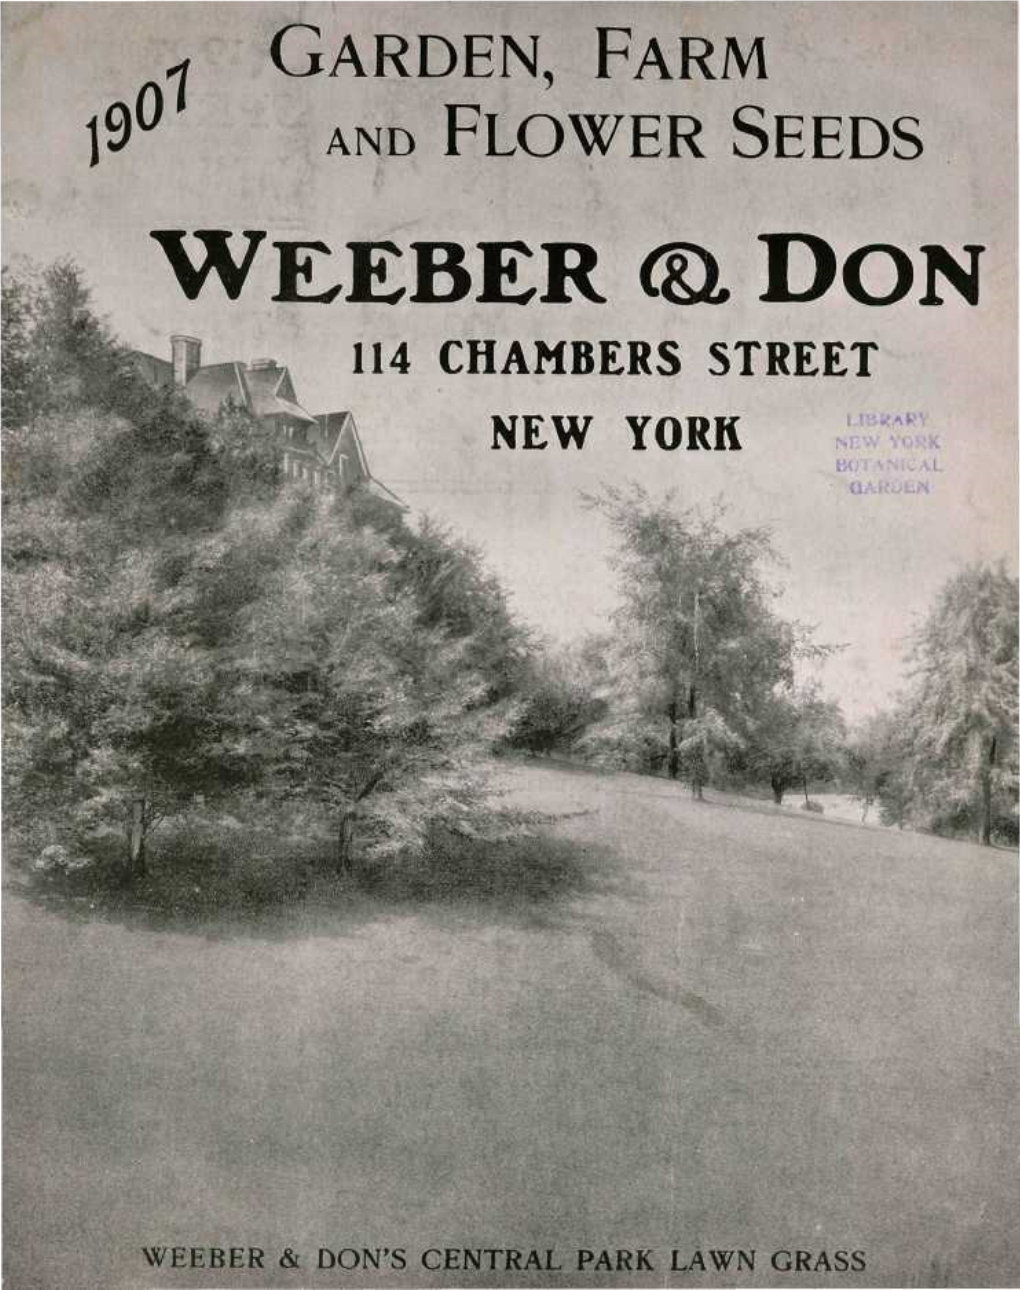 Weeber ®. Don 114 Chambers Street New York ': Librarv